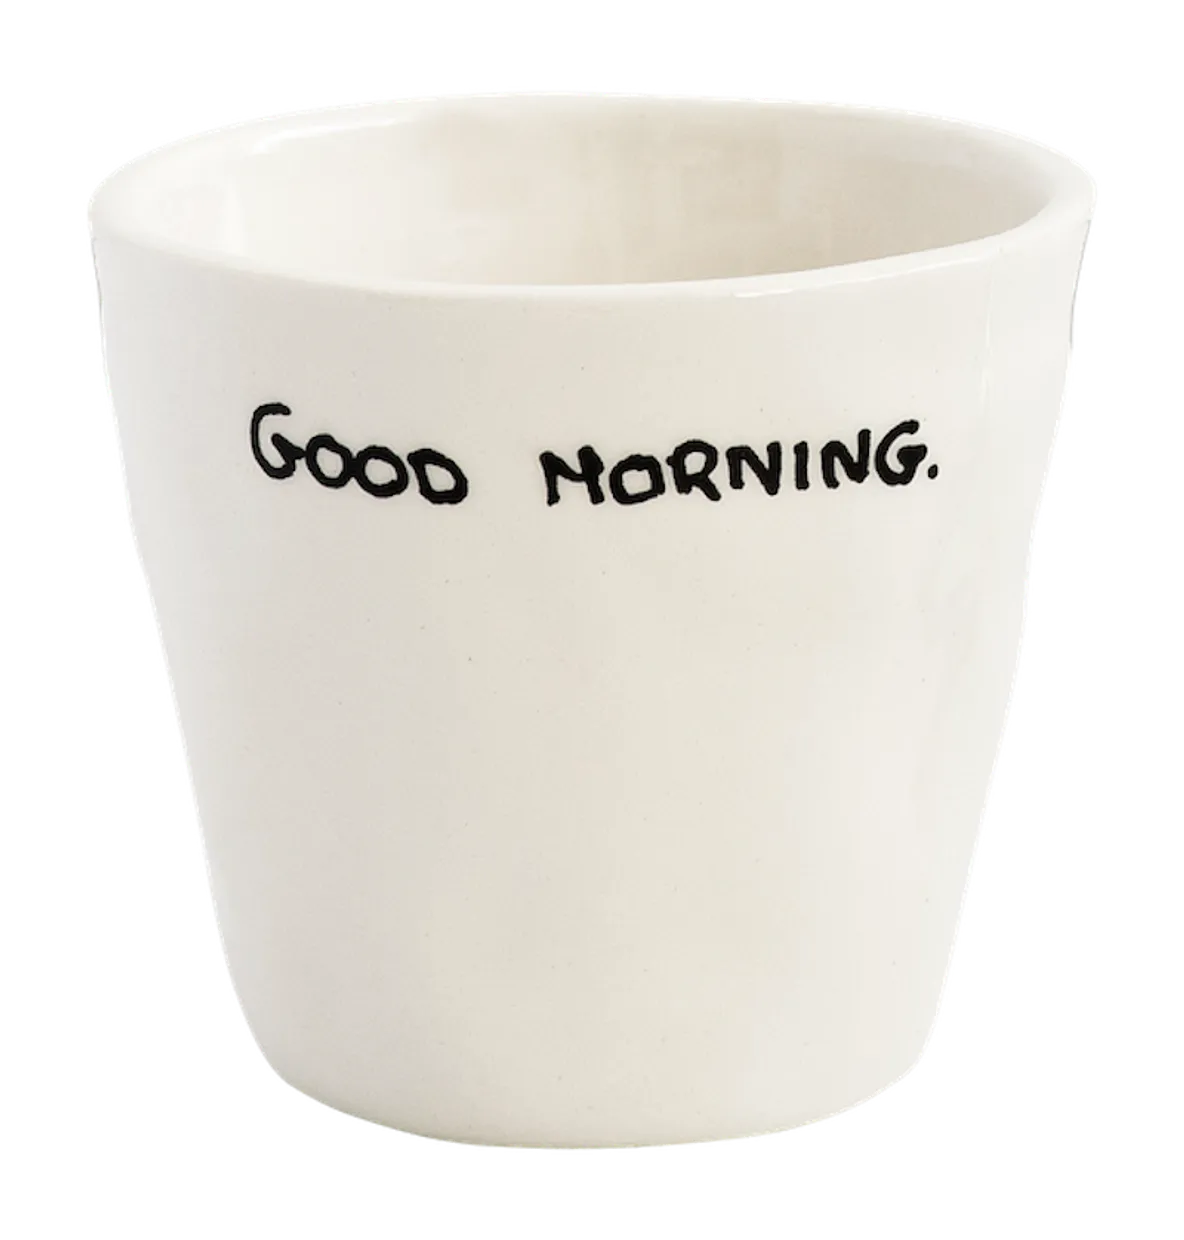 Espresso Cup Goodmorning